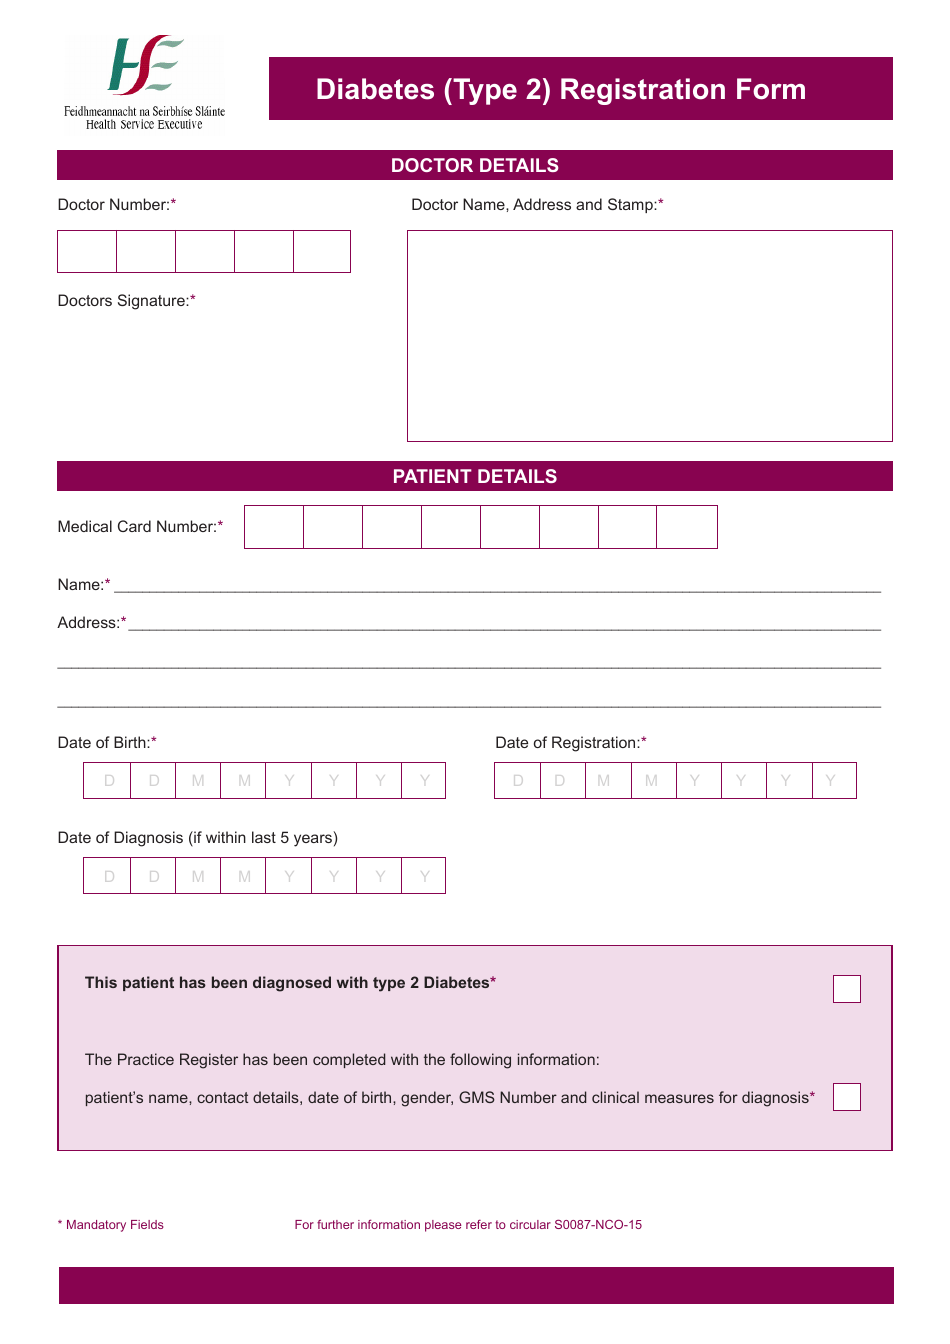 Diabetes (Type 2) Registration Form, Page 1